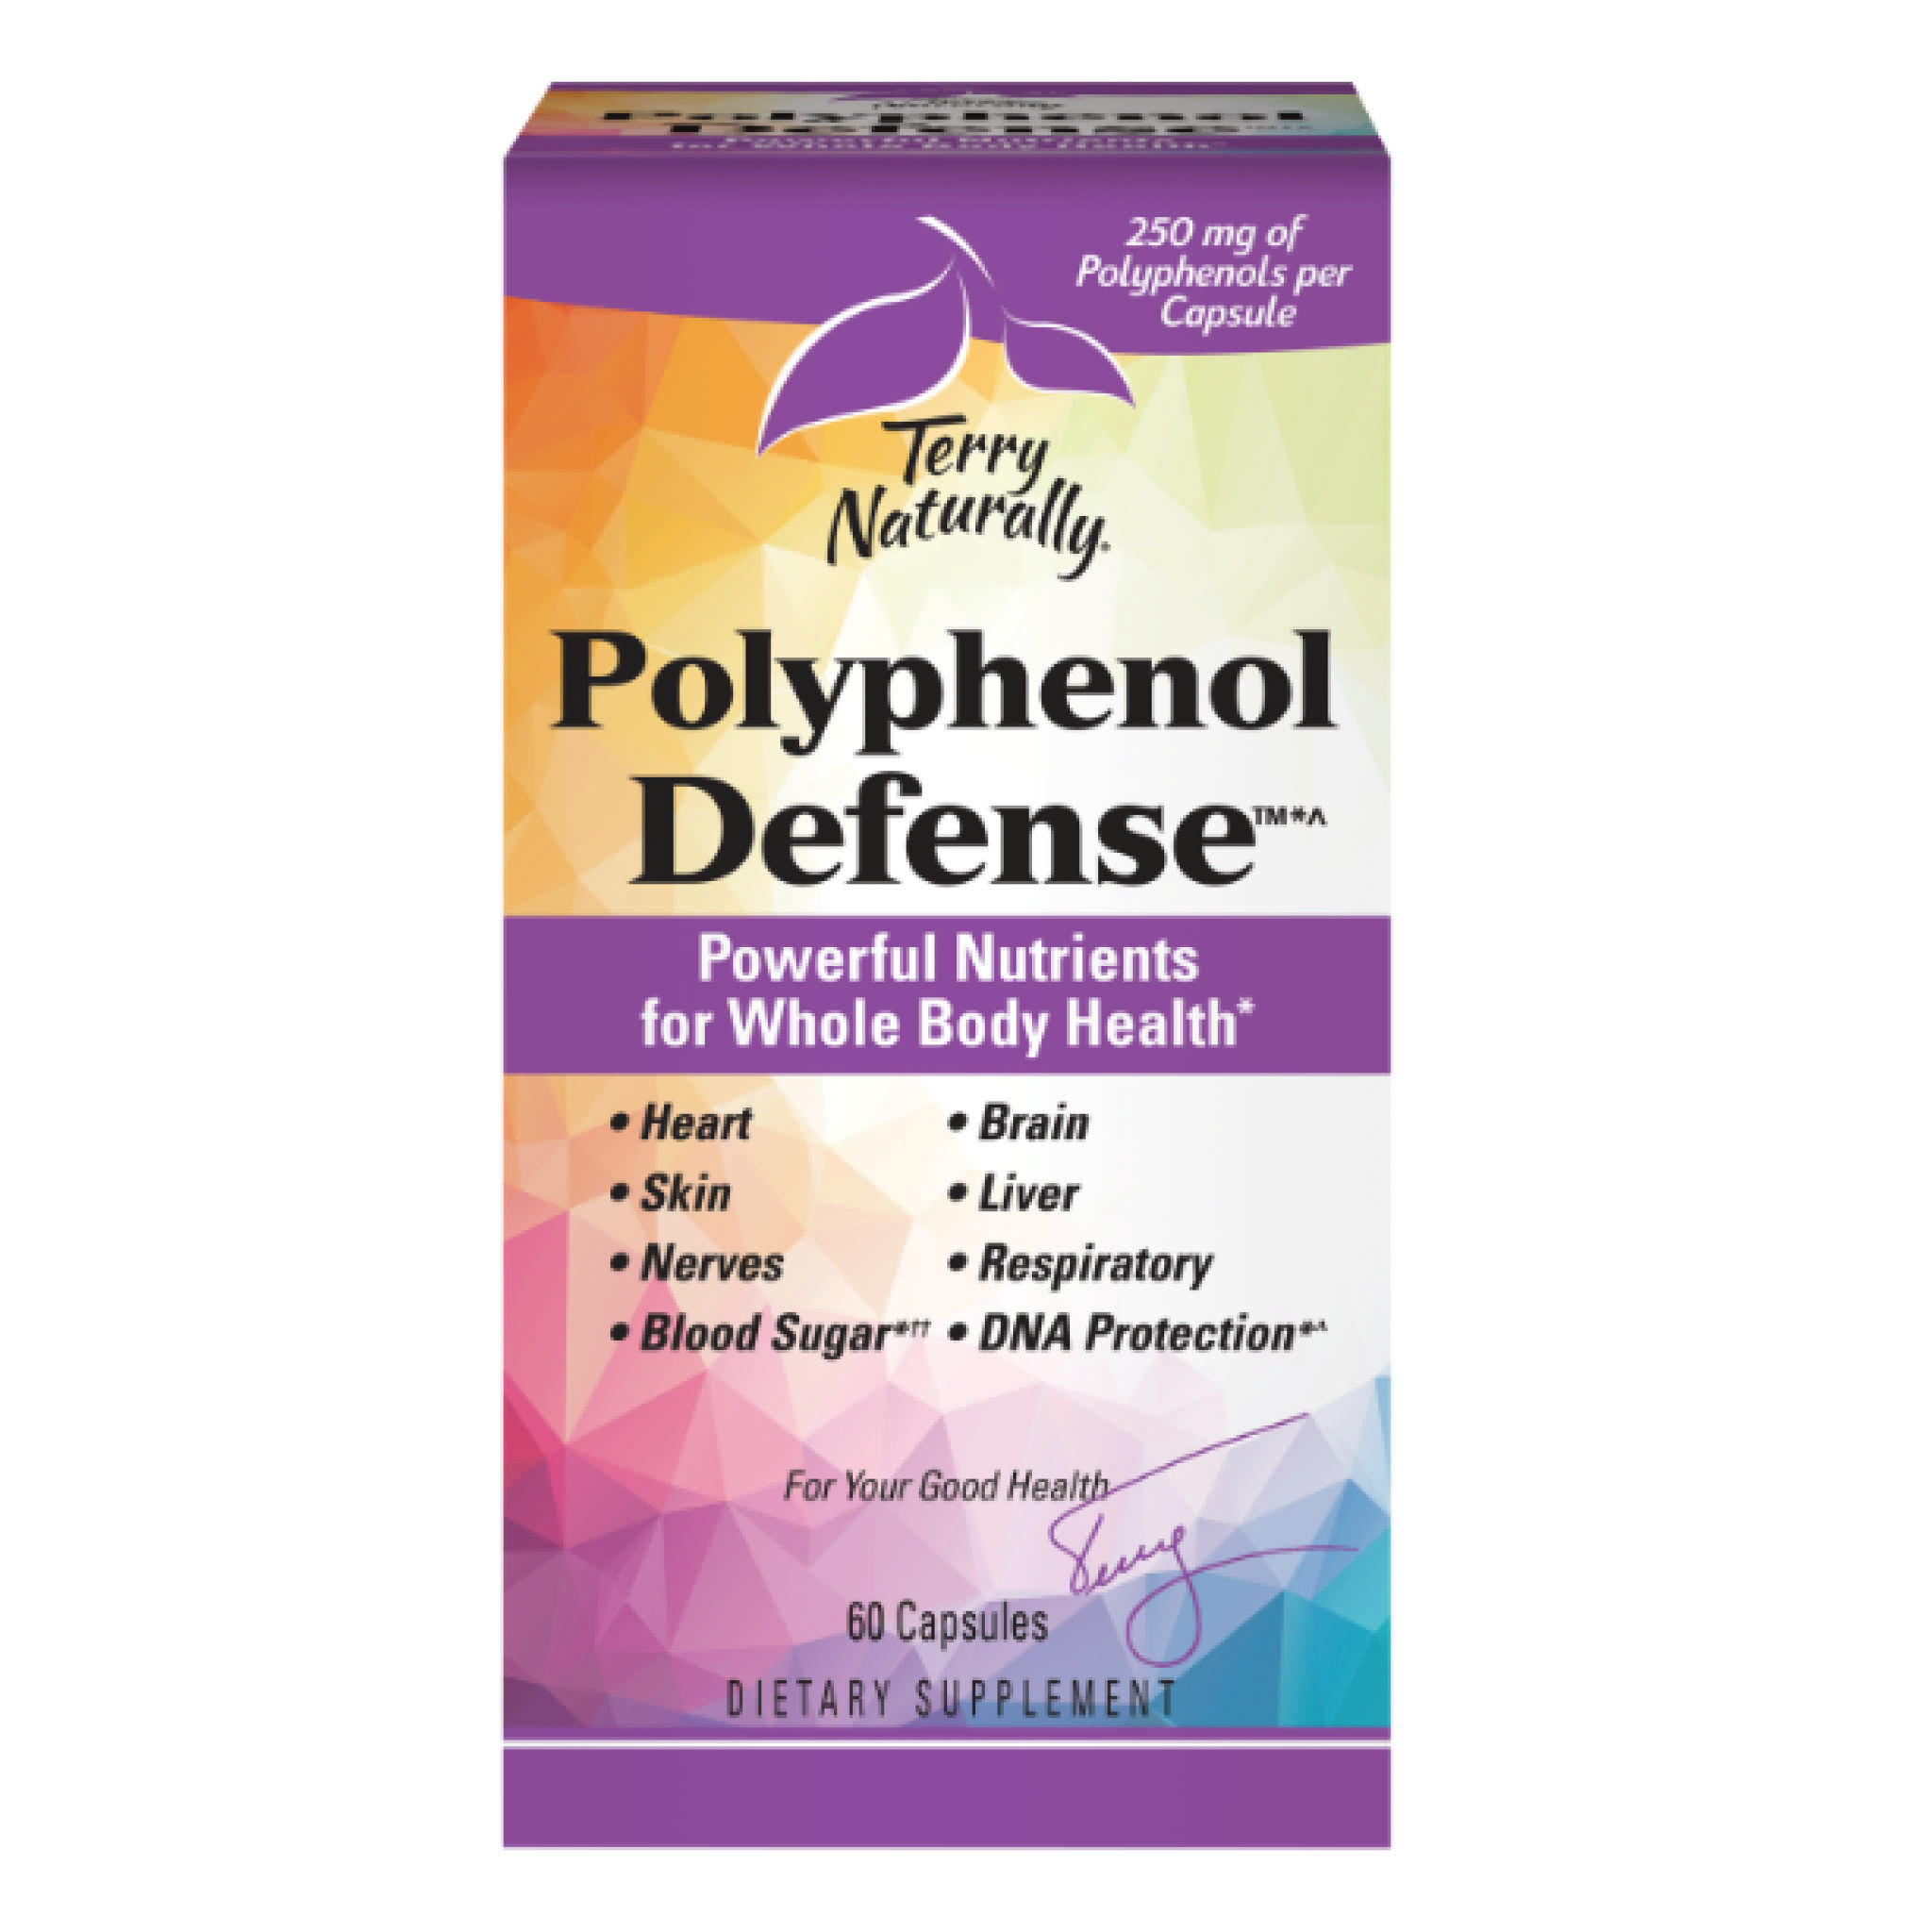 Terry Naturally - Polyphenol Defense